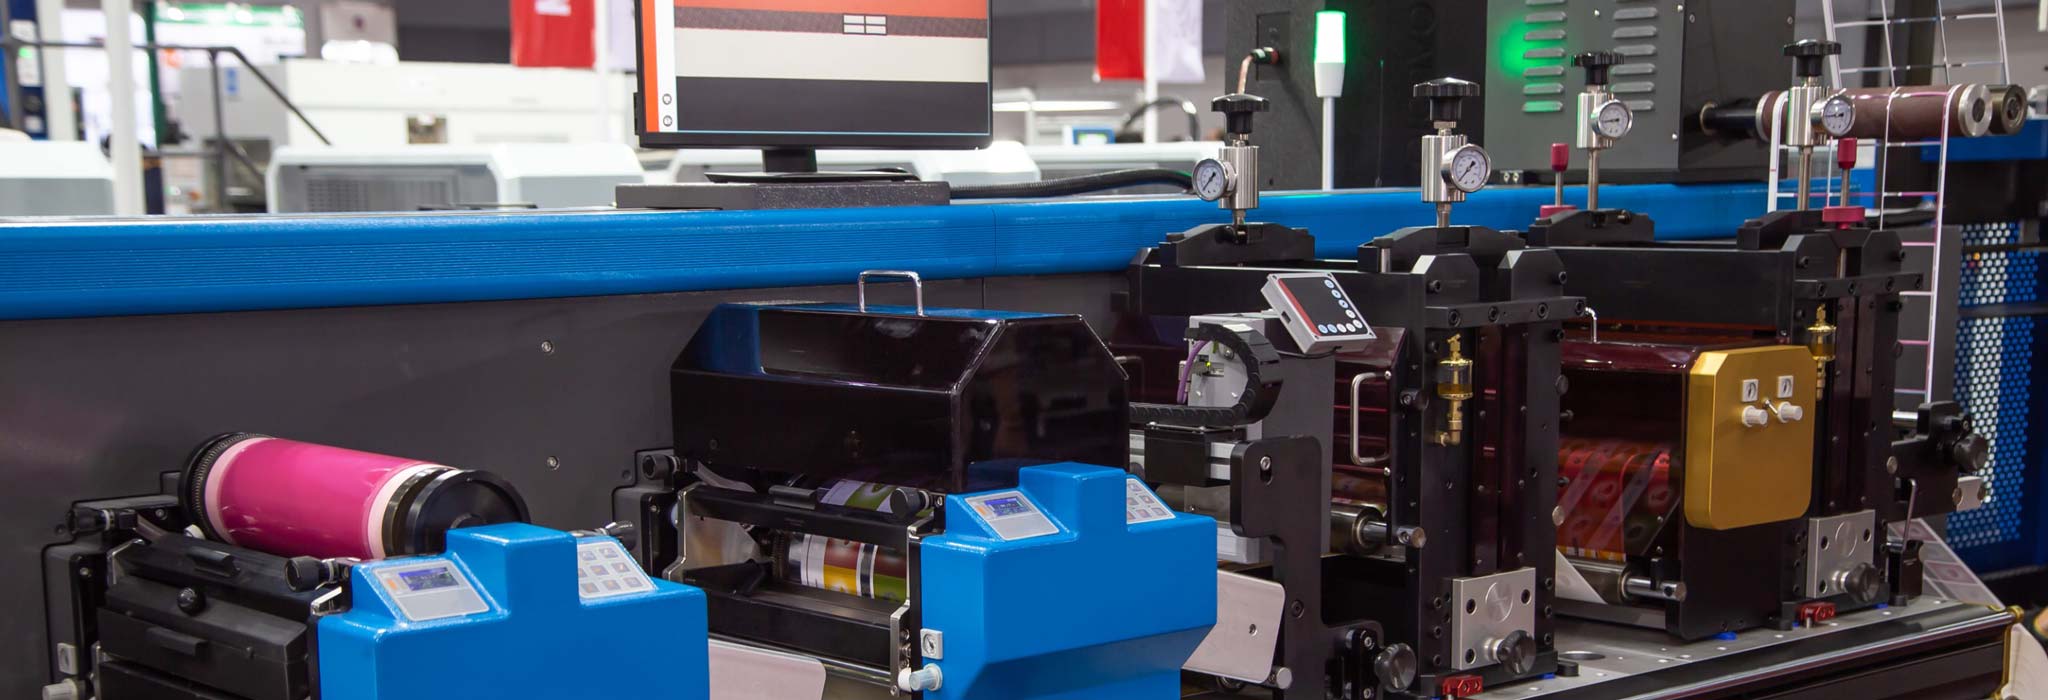 flexographic printing machines